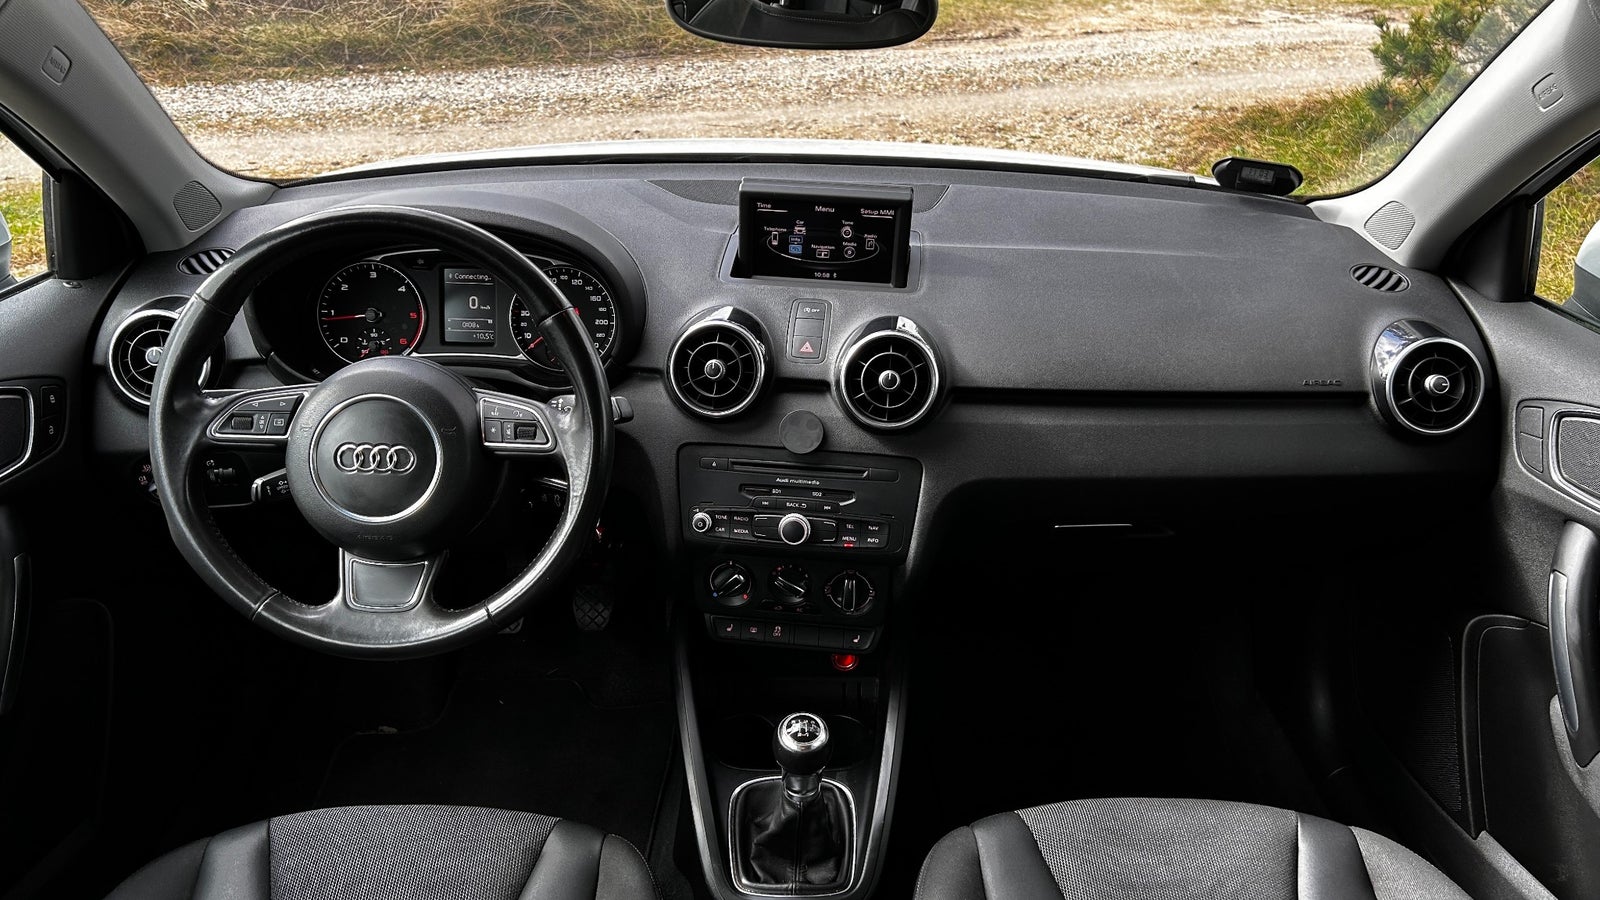 Audi A1 1,6 TDi 105 Ambition Sportback Diesel modelår 2013